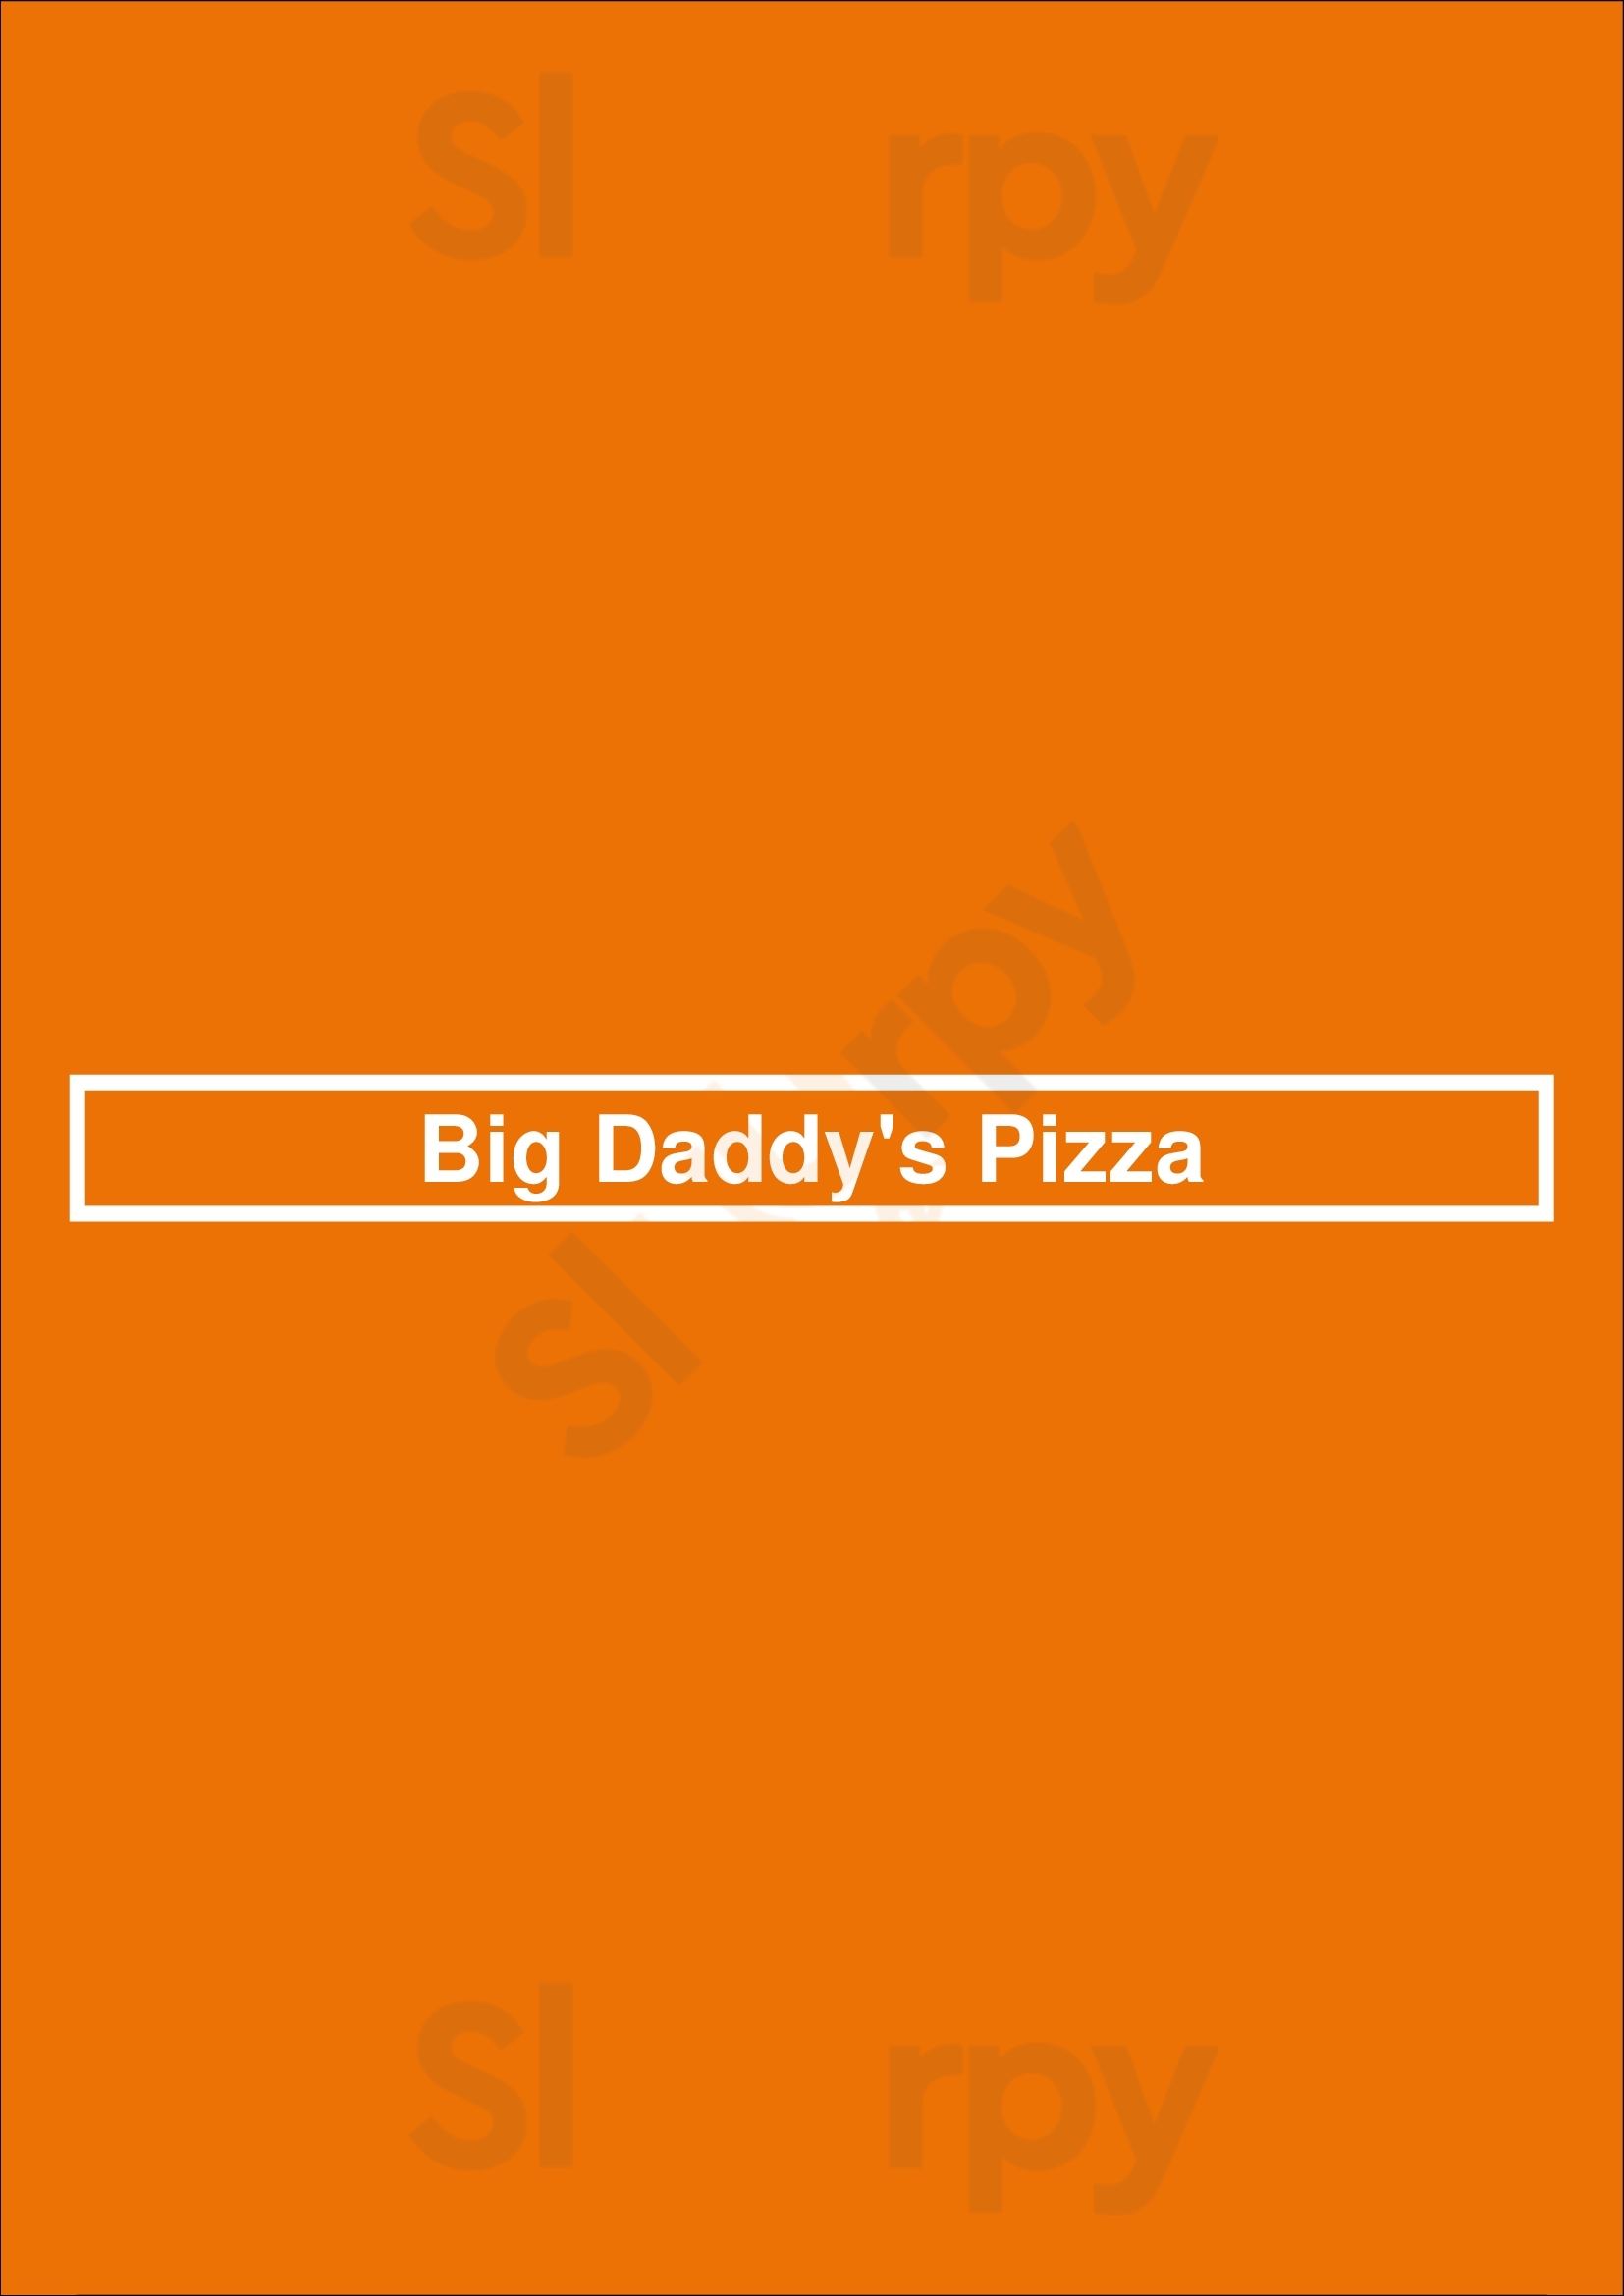 Big Daddy's Pizza Denver Menu - 1